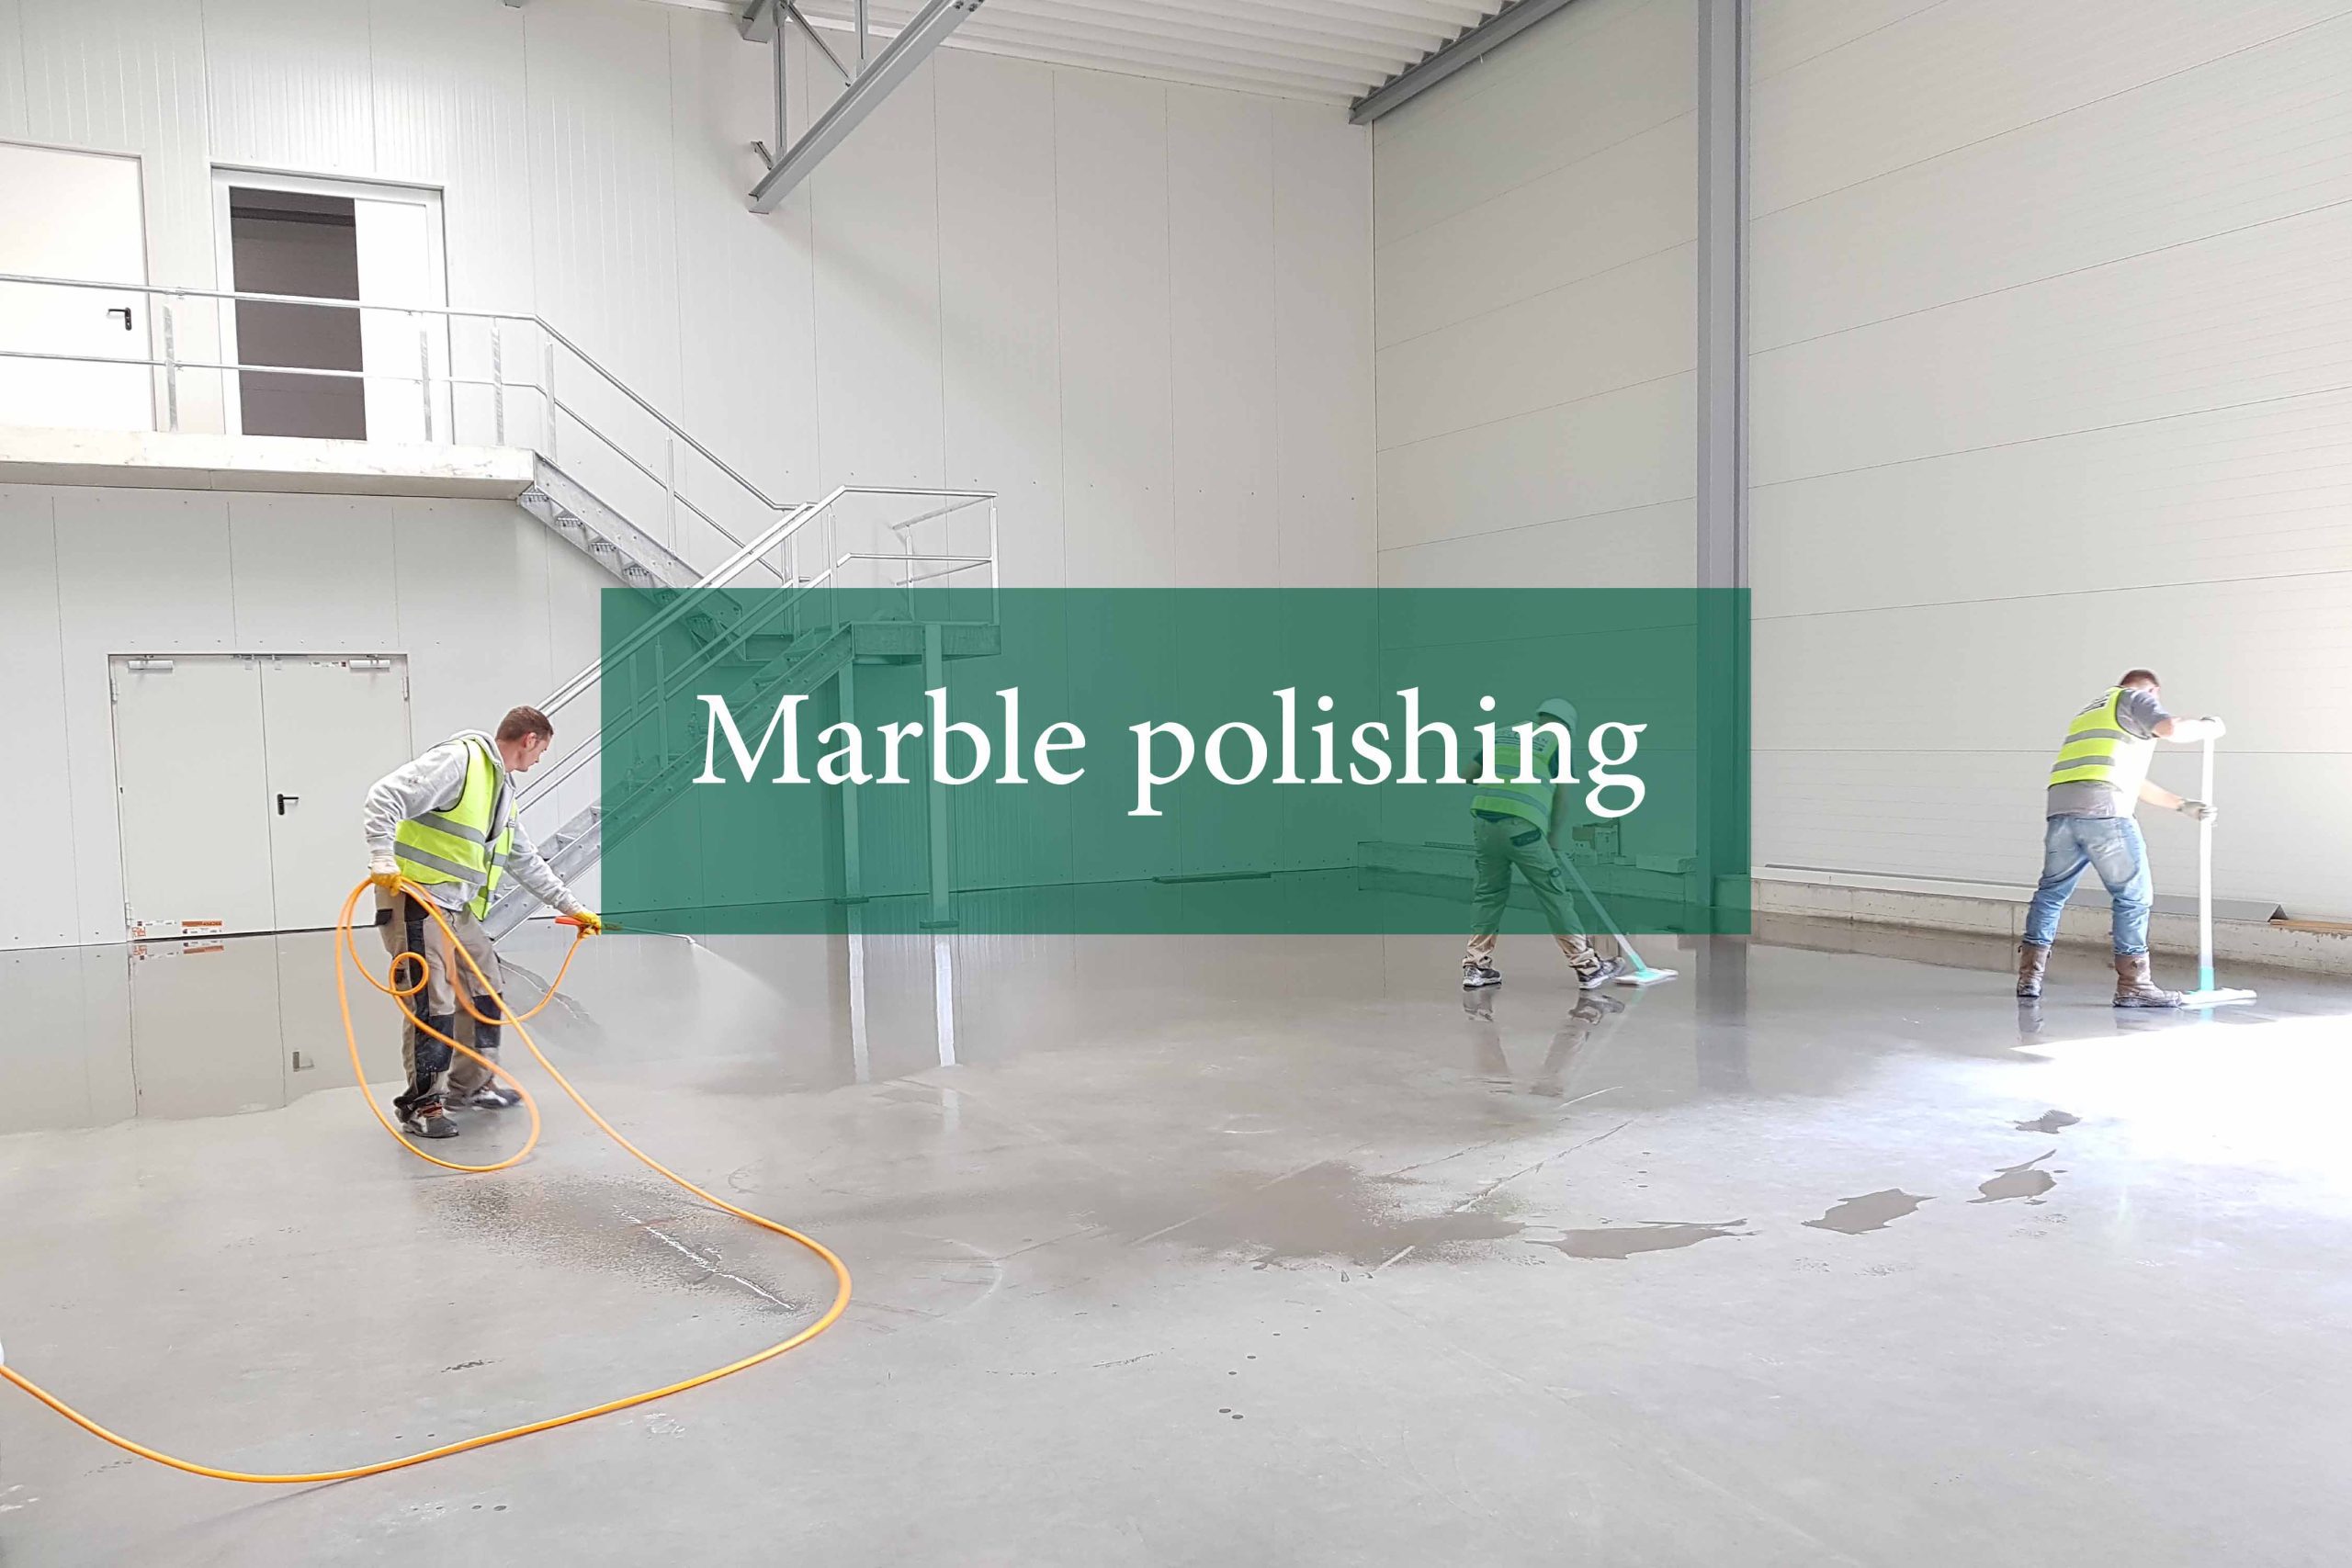 Marble polishing